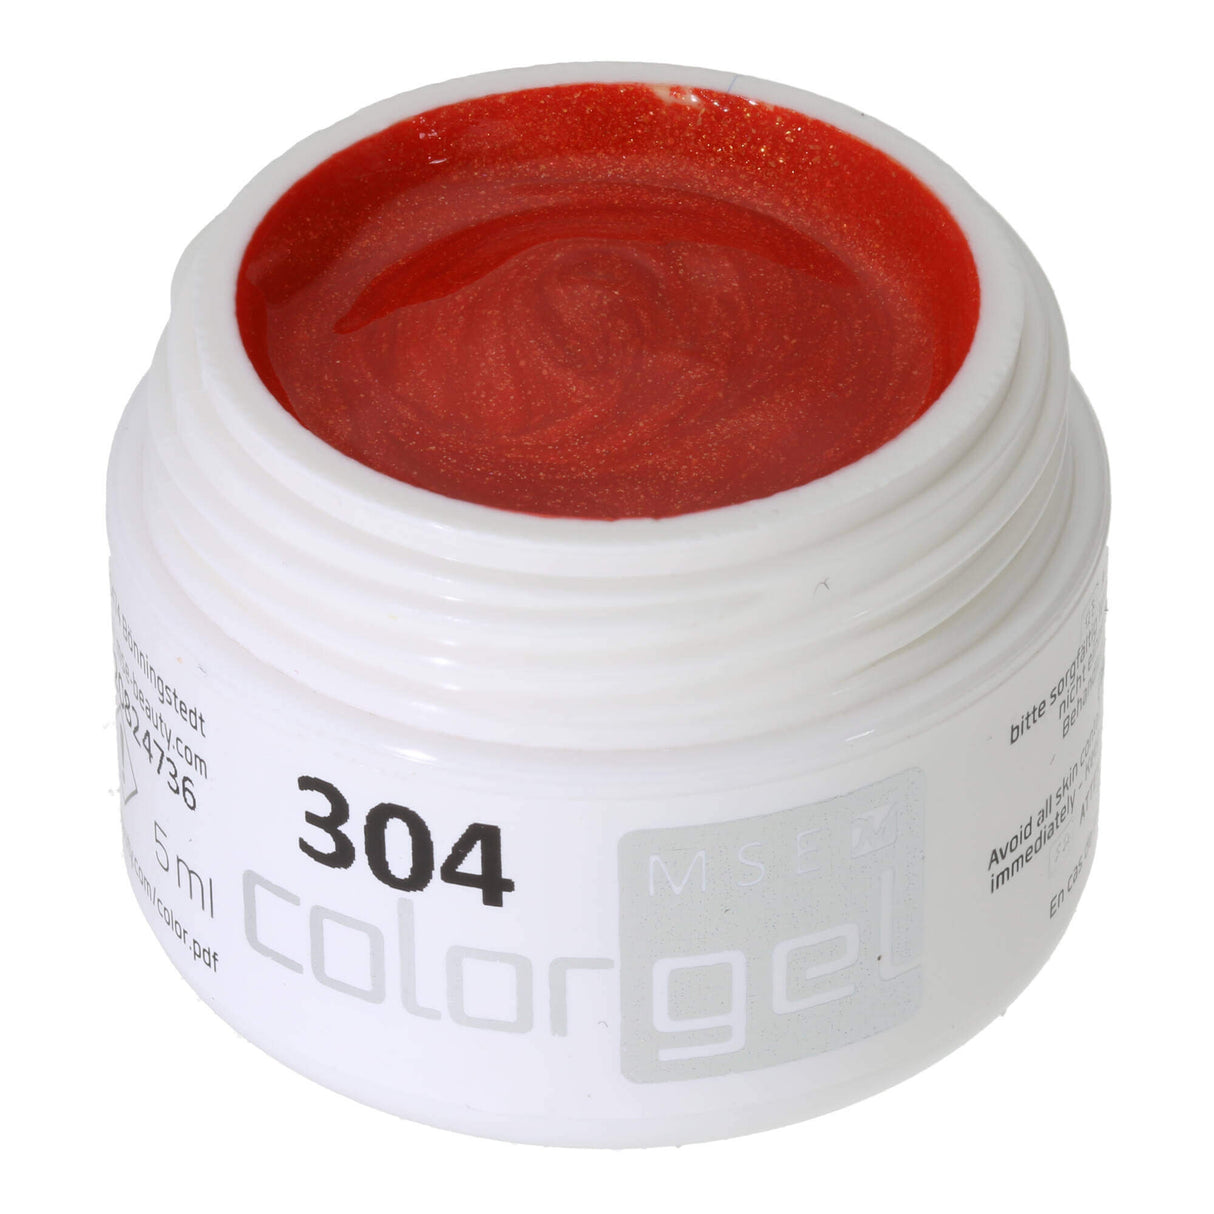 # 304 Premium-EFFEKT Color Gel 5ml Strong red-orange with gold effect